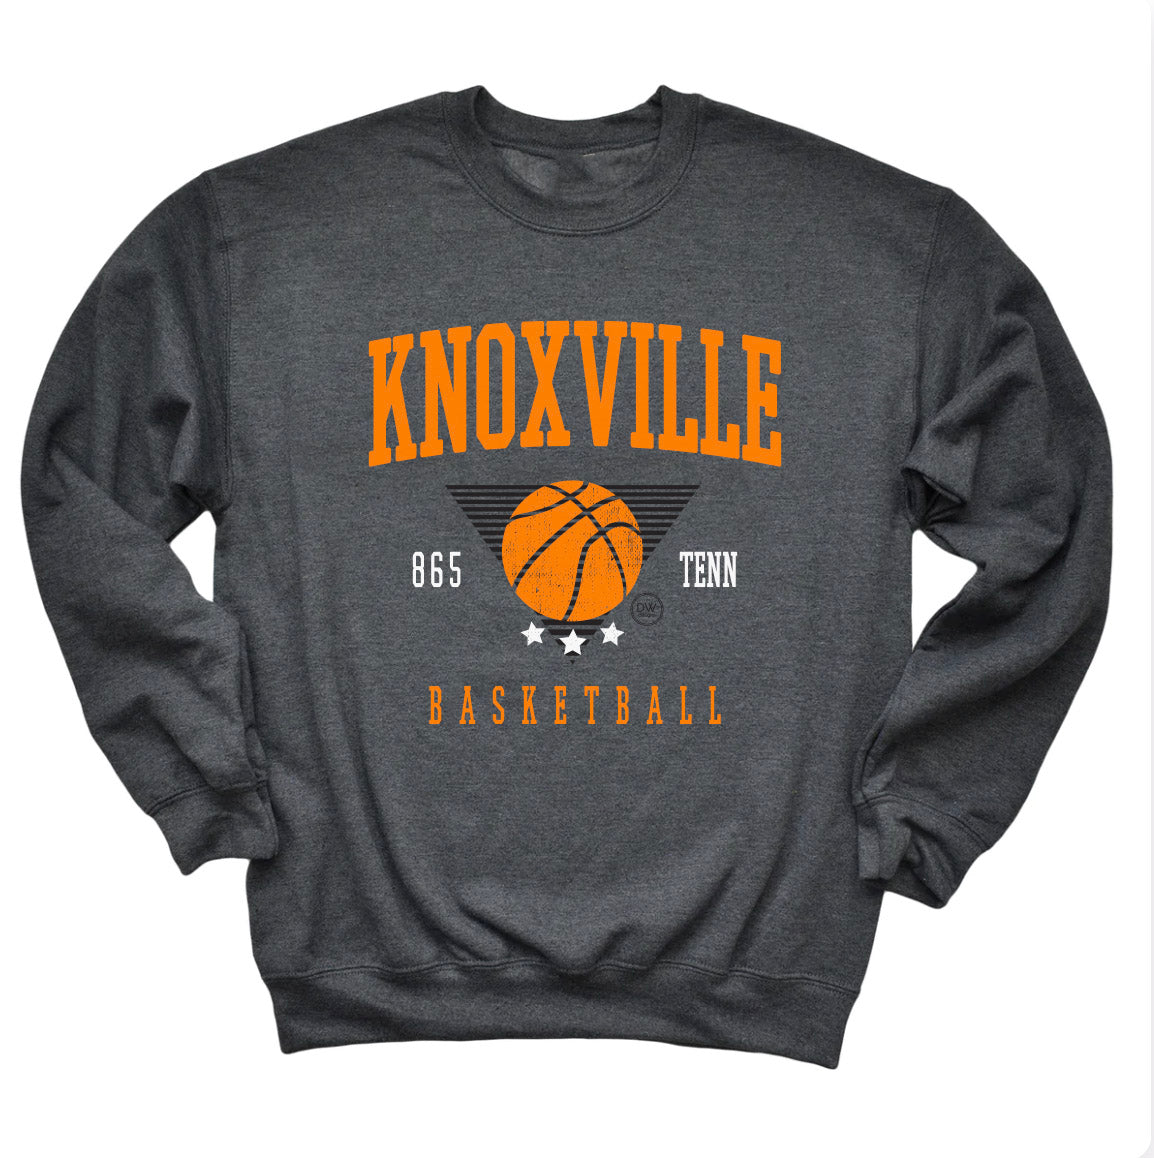 The Knoxville Basketball Retro Sweatshirt